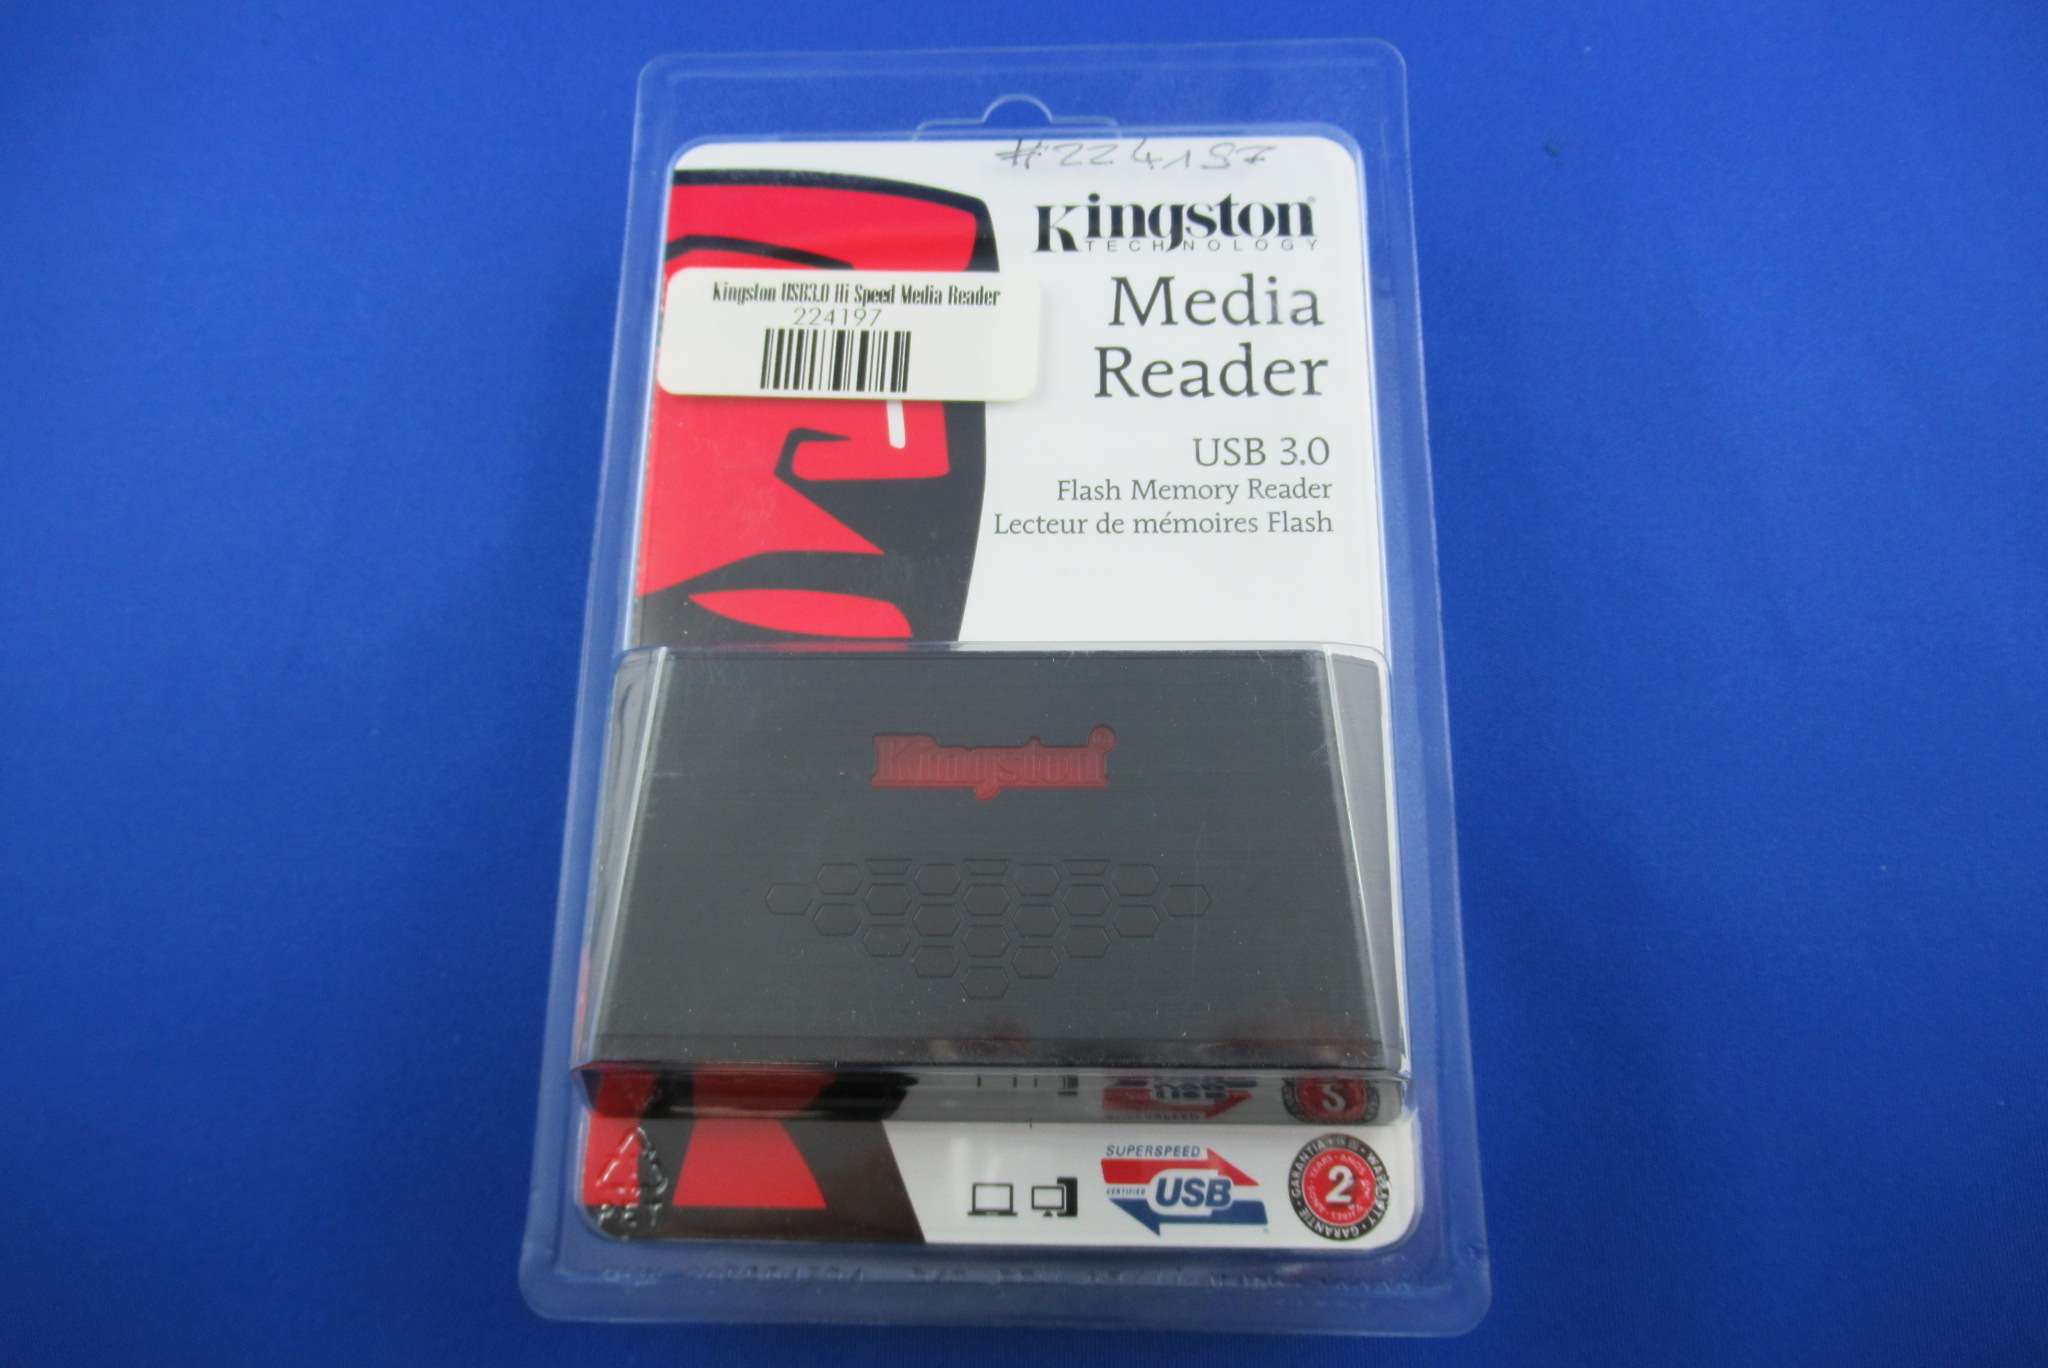 externer USB 3.0 Hi-Speed Media Reader KINGSTON FCR-HS3